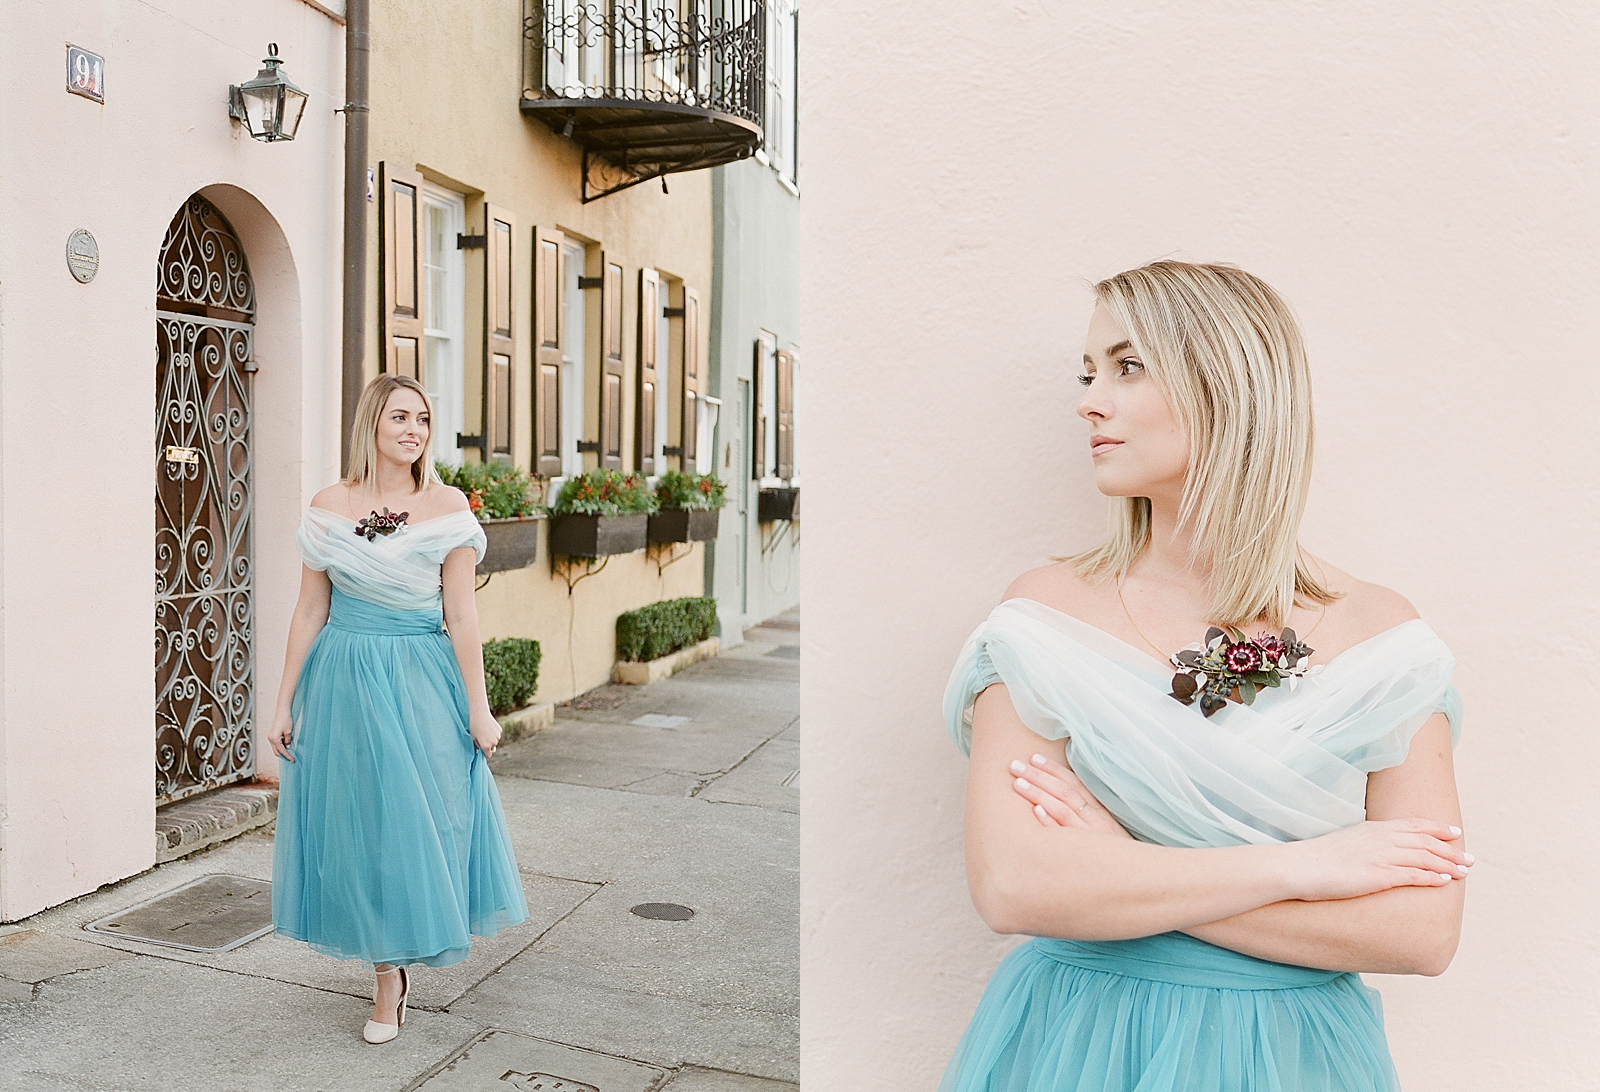 Jamie in Cinderella Blue Vintage Dress Walking Down Sidewalk and leaning on wall photos 